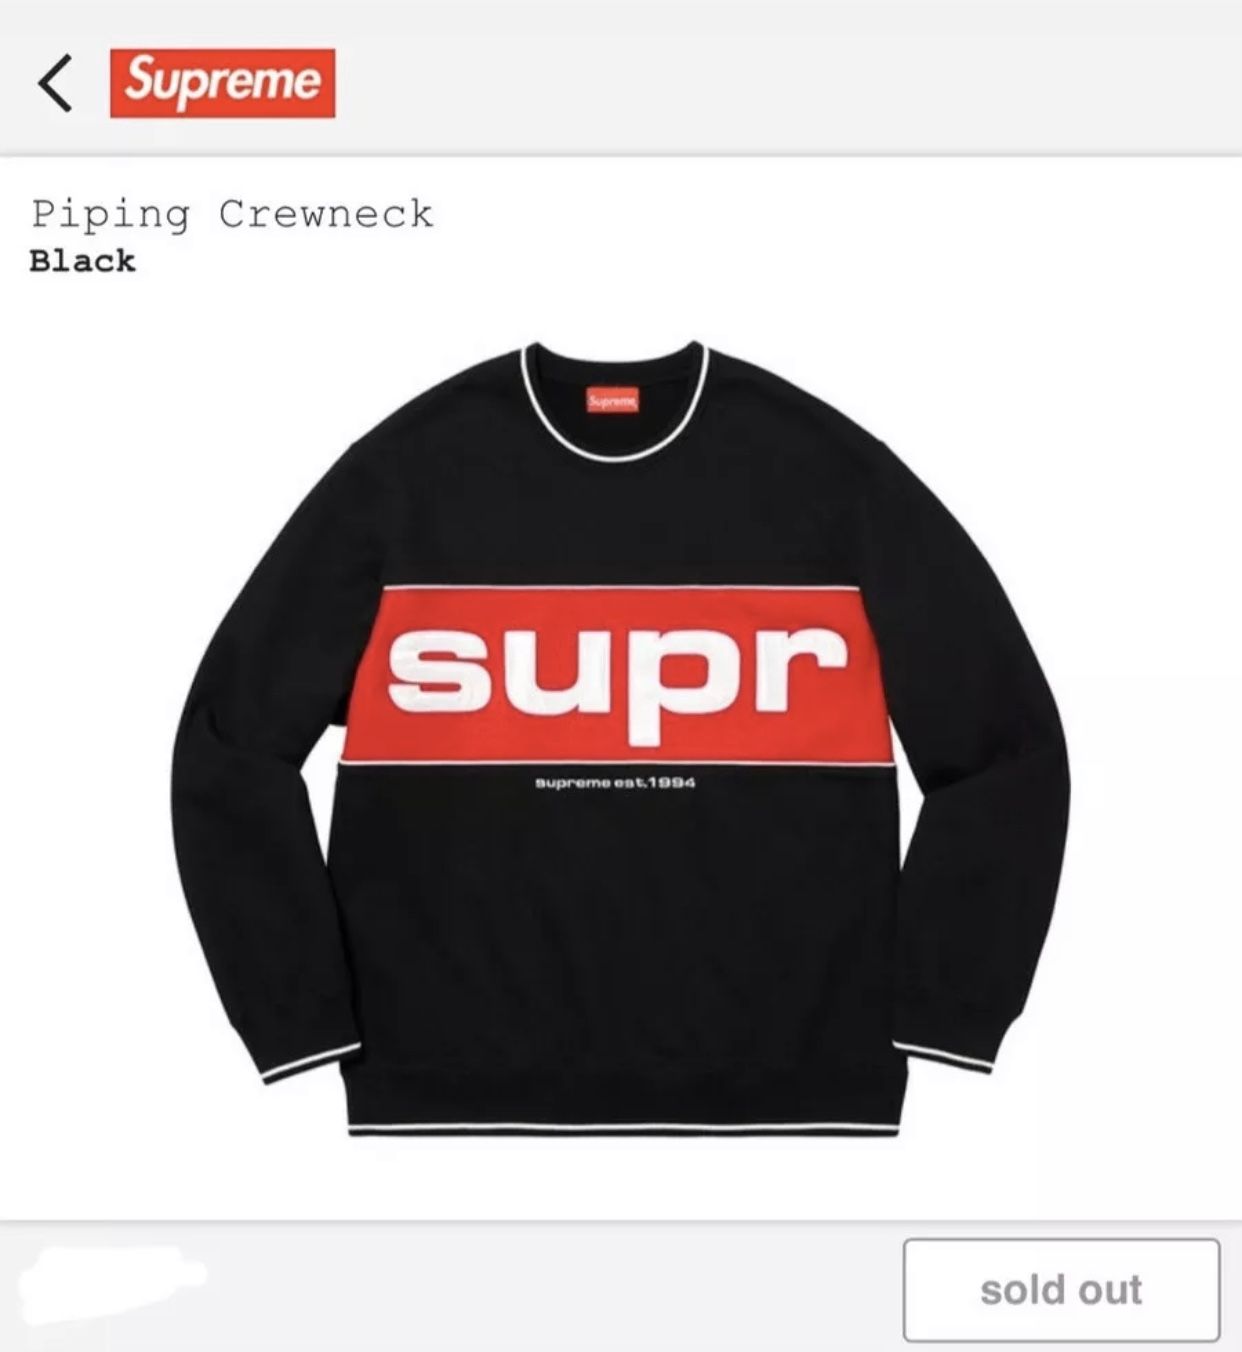 Supreme Piping Crew Neck Black Size Medium Men Sweater 100% Authentic Guarantee. NEGOTIABLE!